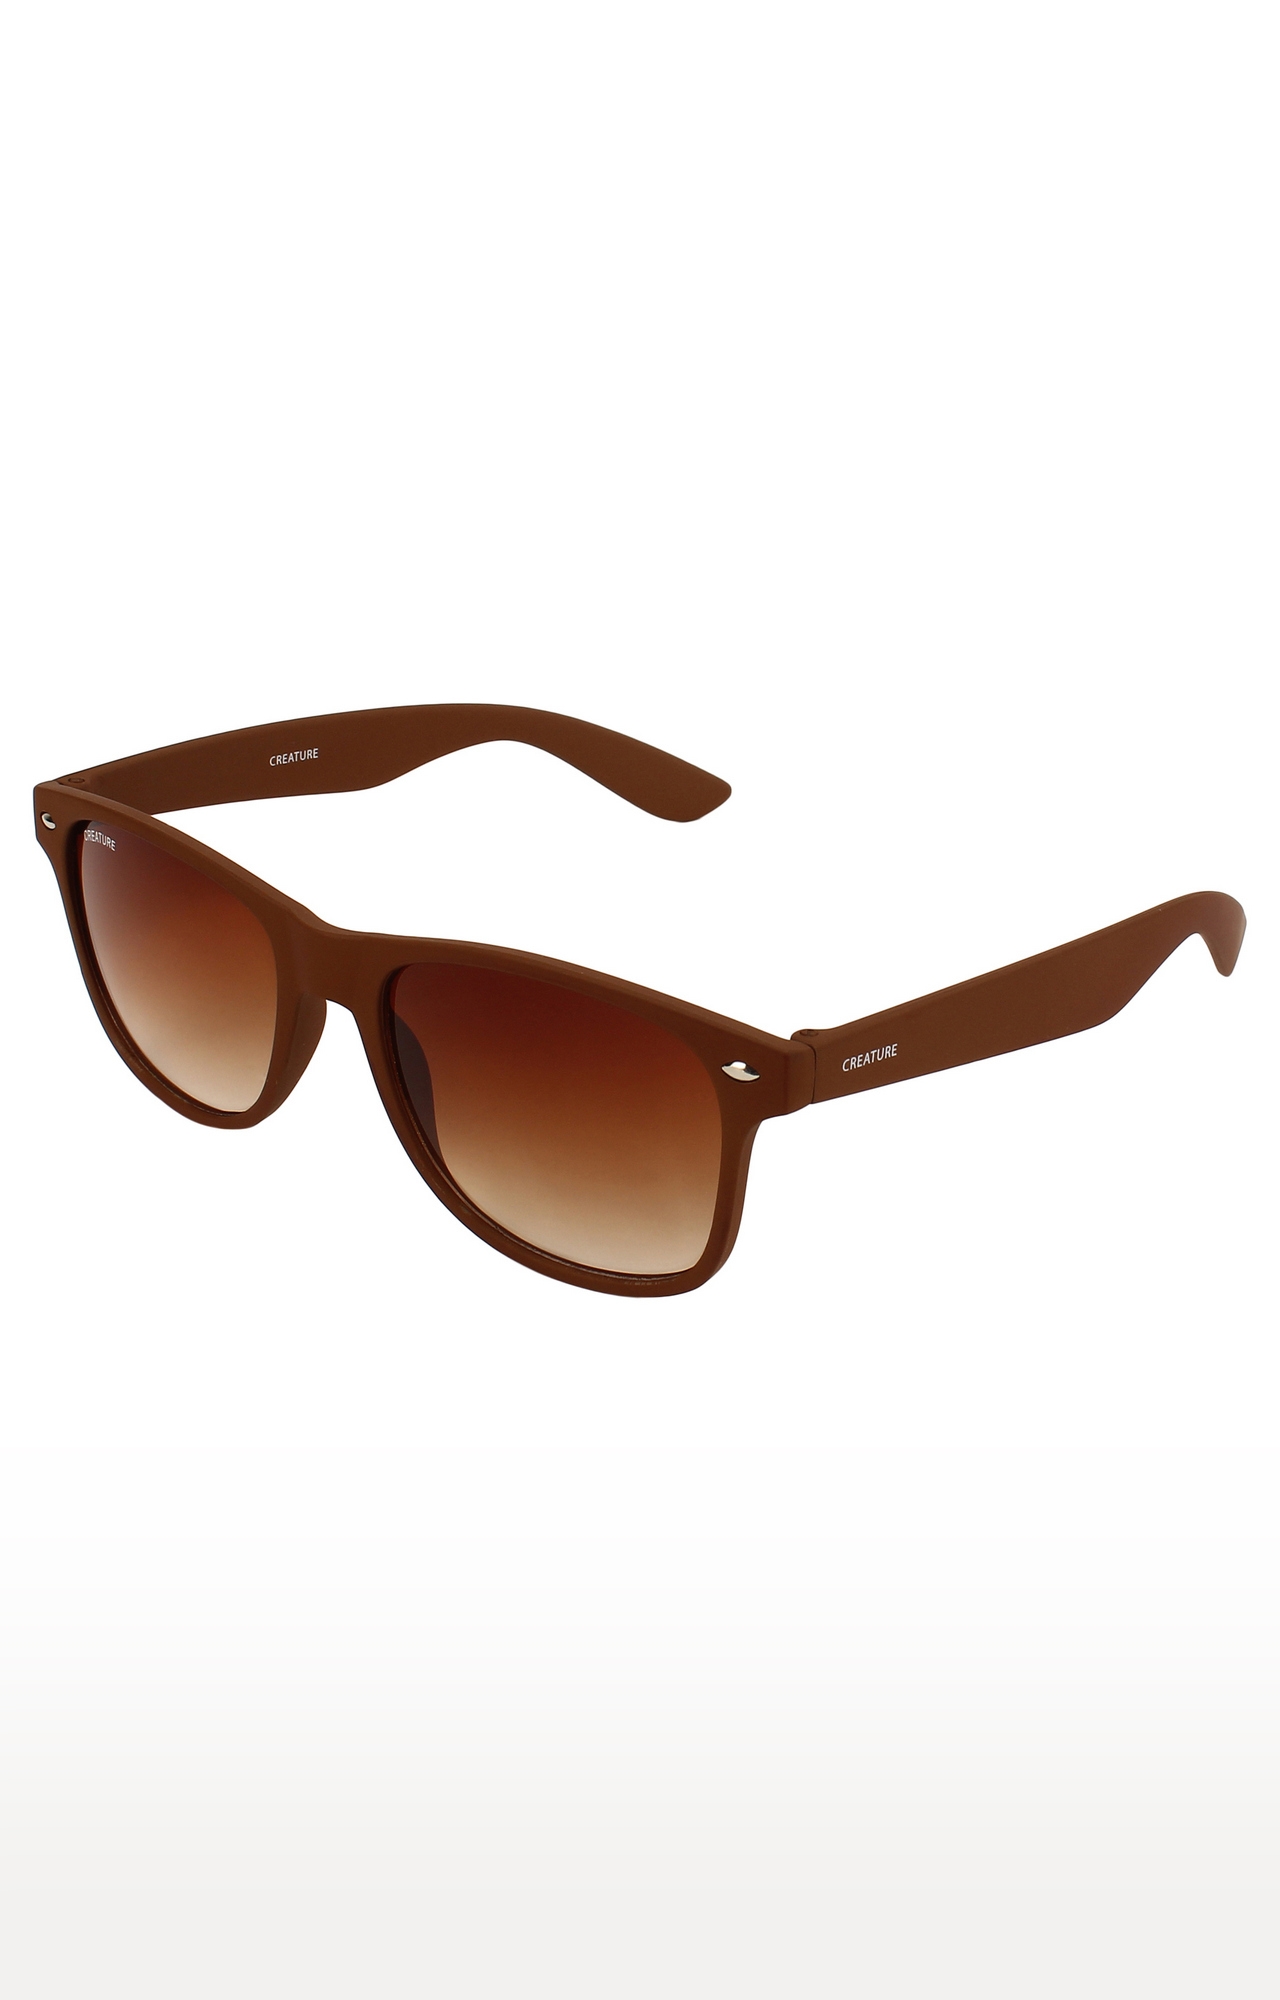 CREATURE Brown Matte Finish Wayfarer UV Protected Unisex Sunglasses (Lens-Brown|Frame-Brown)